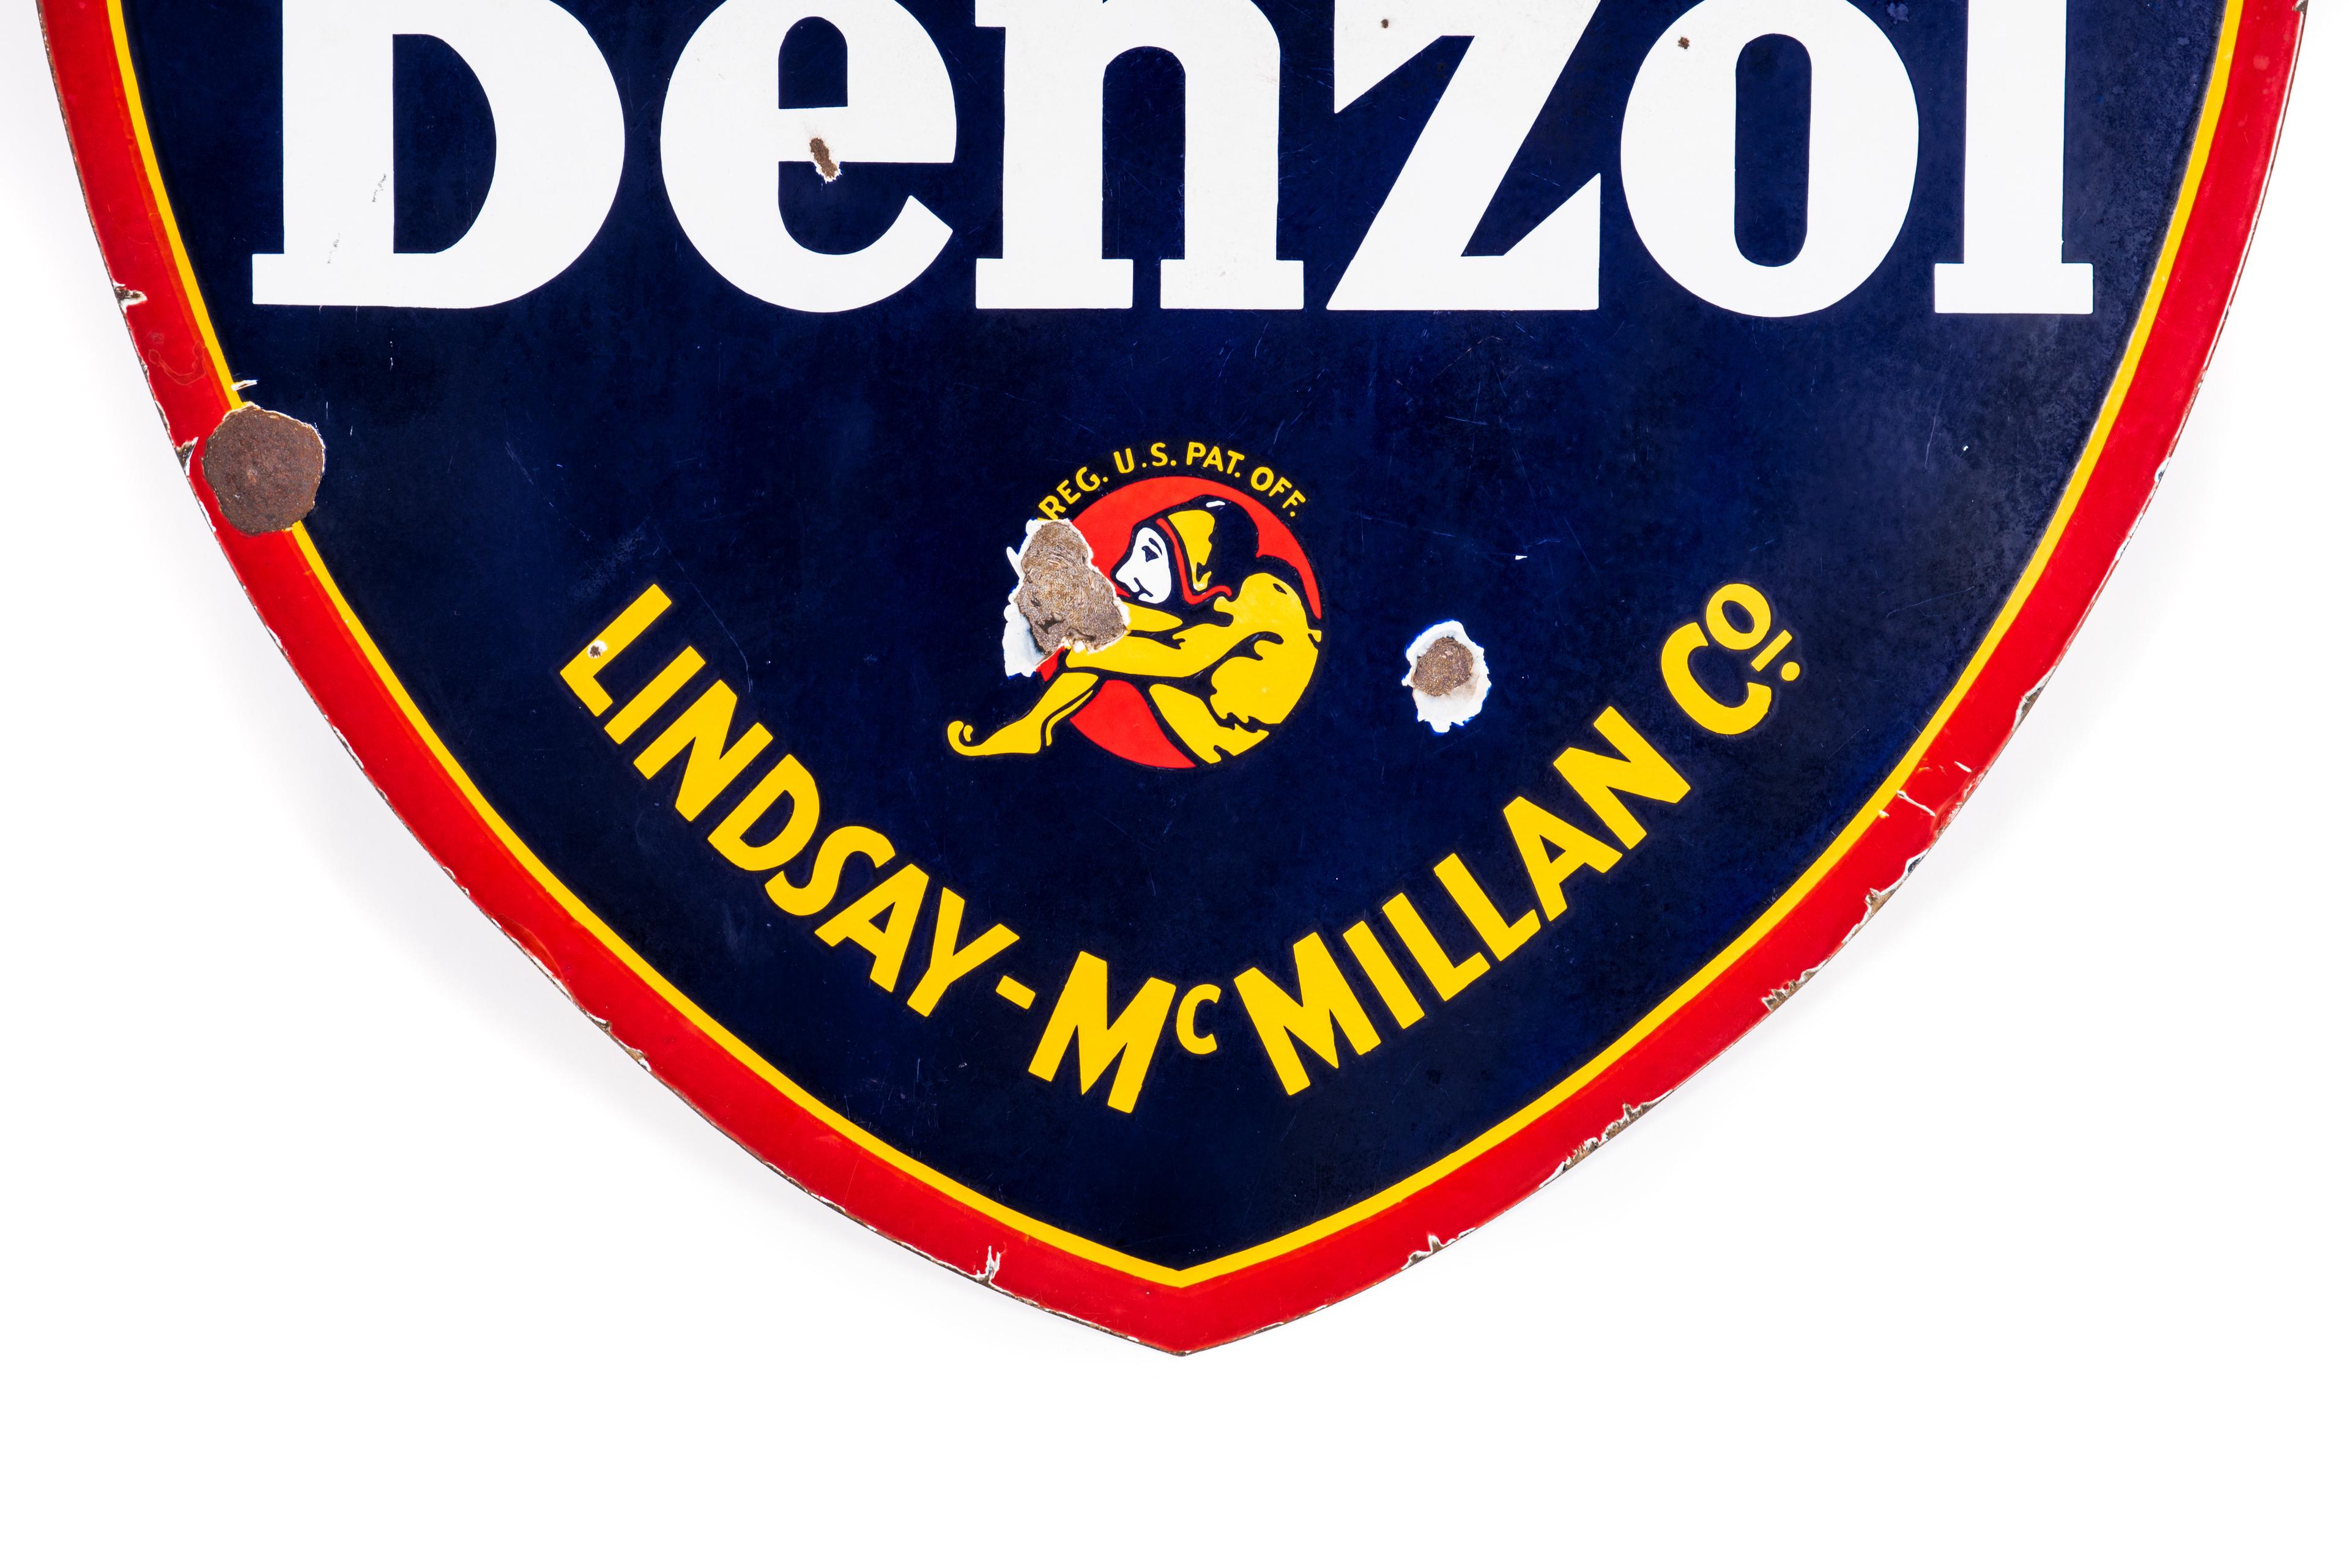 Delco Benzol Lindsay- McMillan Co. Porcelain Sign